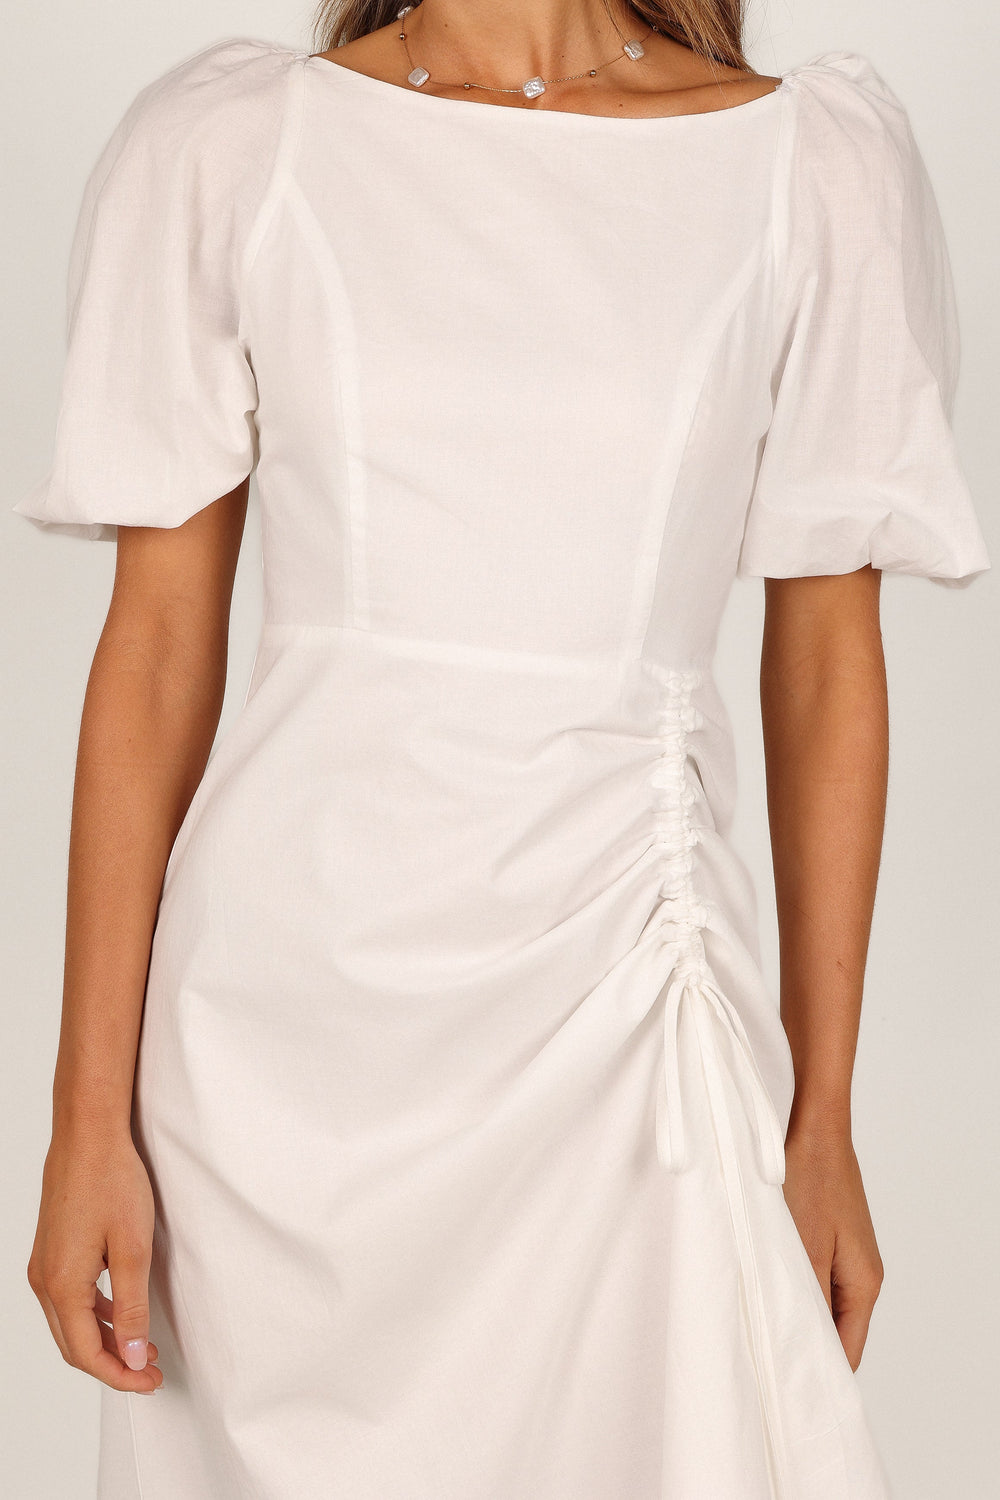 DRESSES Suna Midi Dress - White